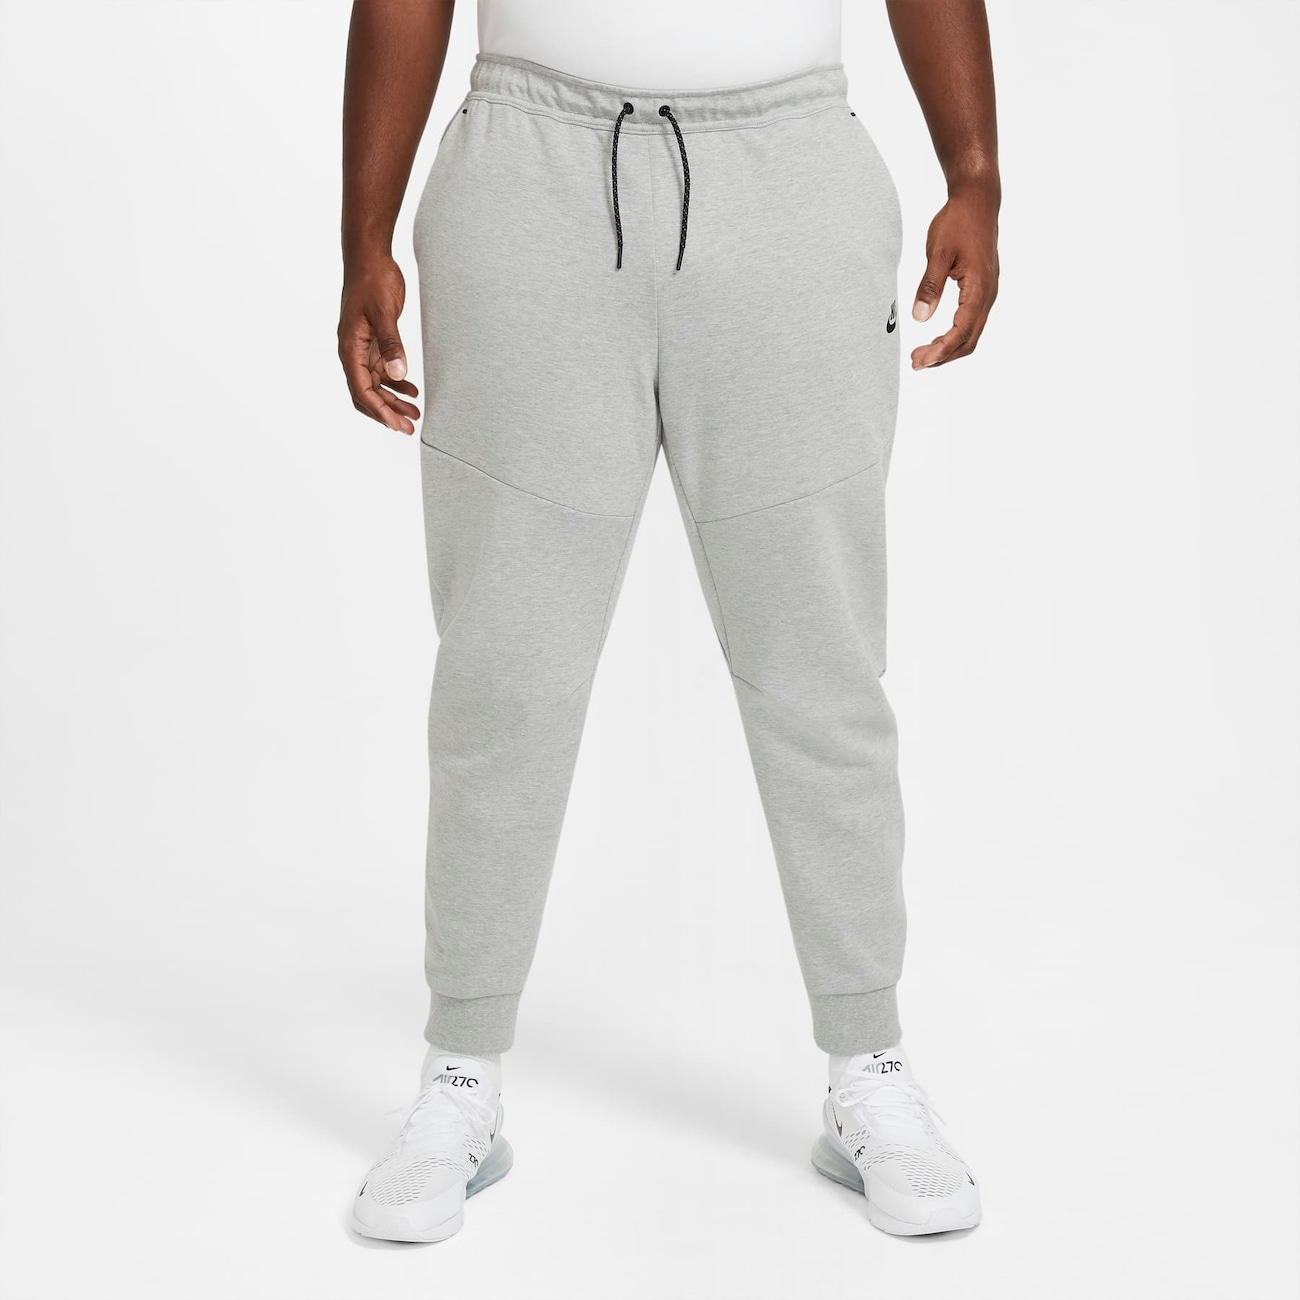 Calça Nike Sportswear Tech Fleece Masculina - Foto 15